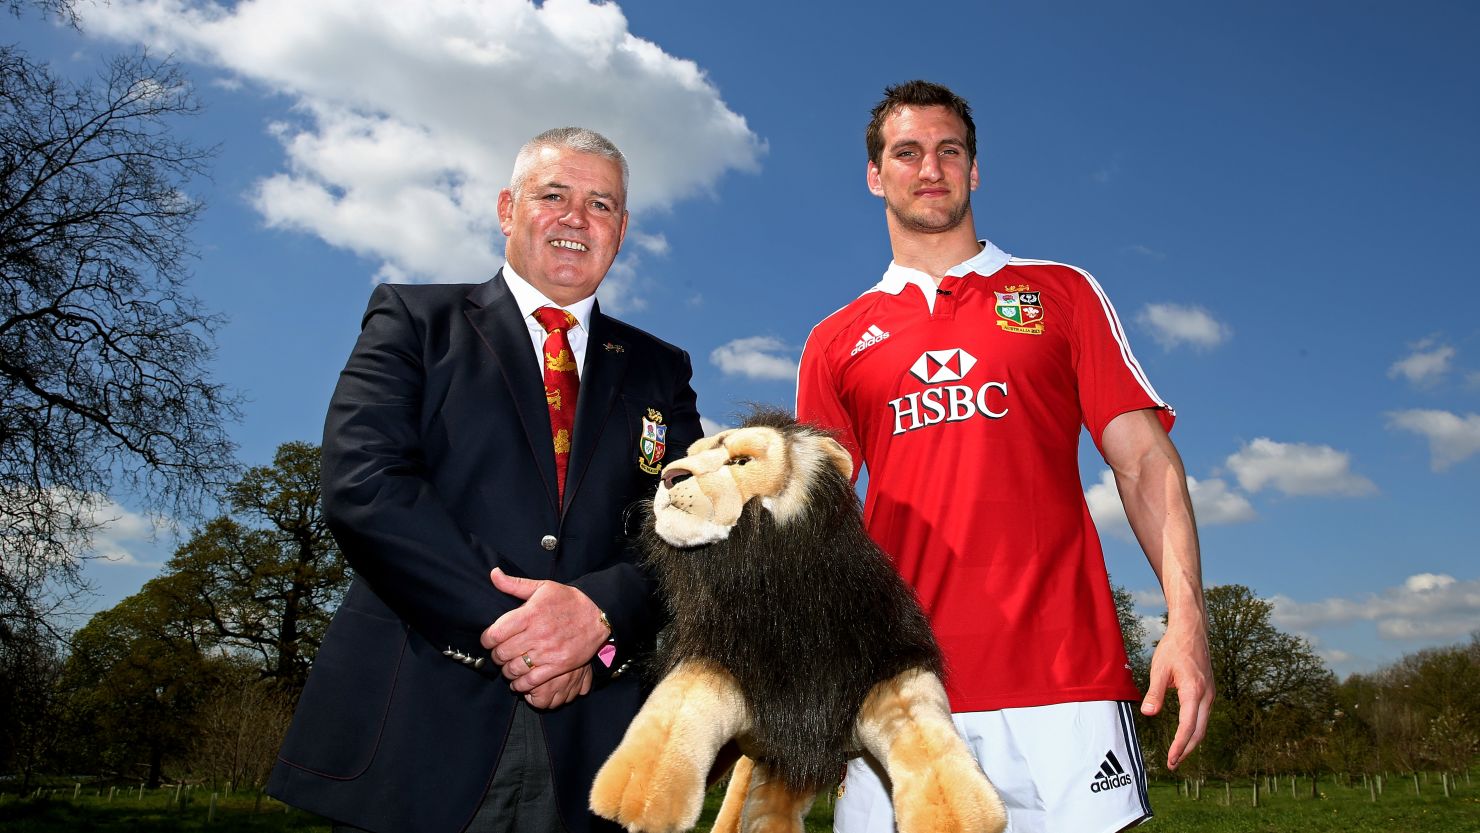 Welshman Sam Warburton has been chosen to skipper the Lions by coach Warren Gatland